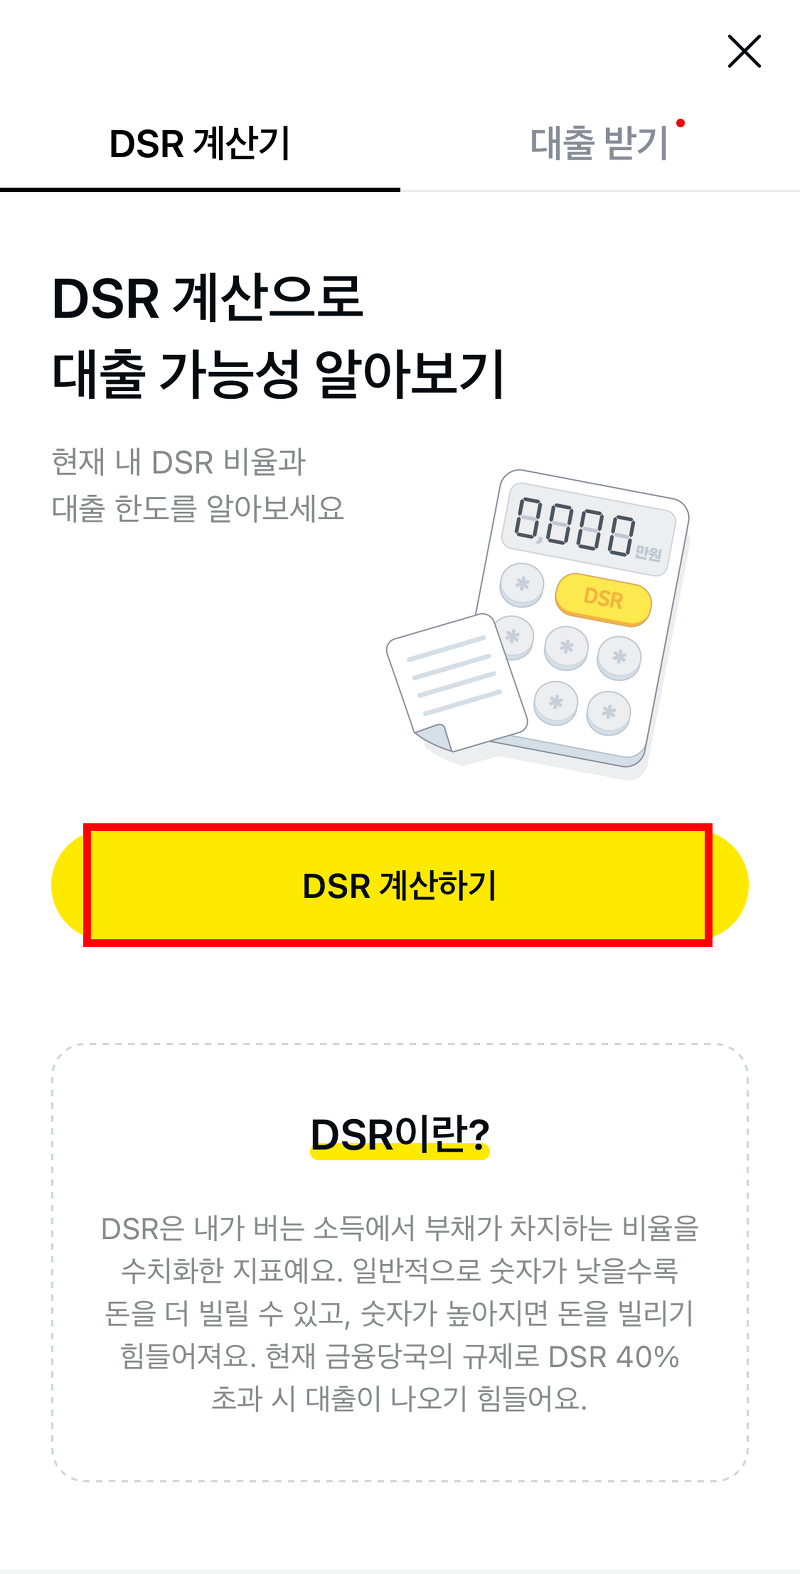 DSR 계산기 사용방법(네이버, 부동산, 카카오) 및 LTV, DSR, DTI 뜻